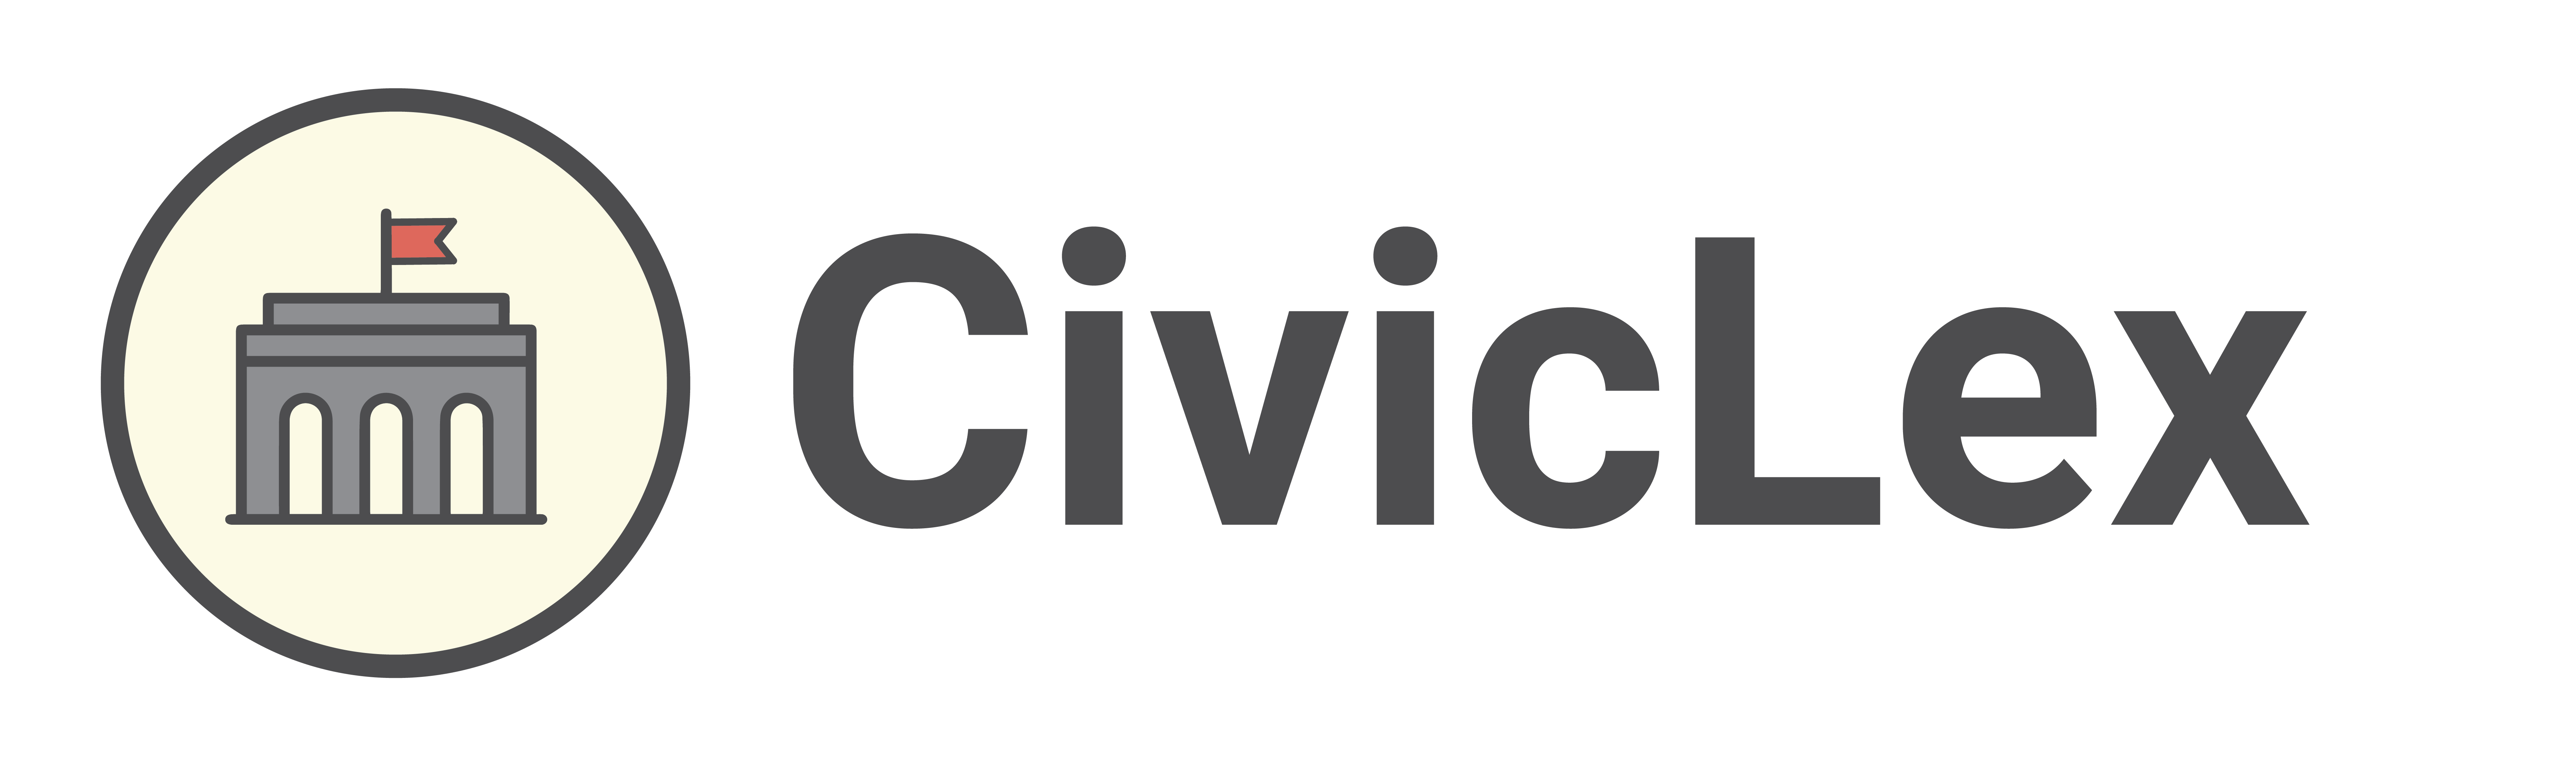 CivicLex logo